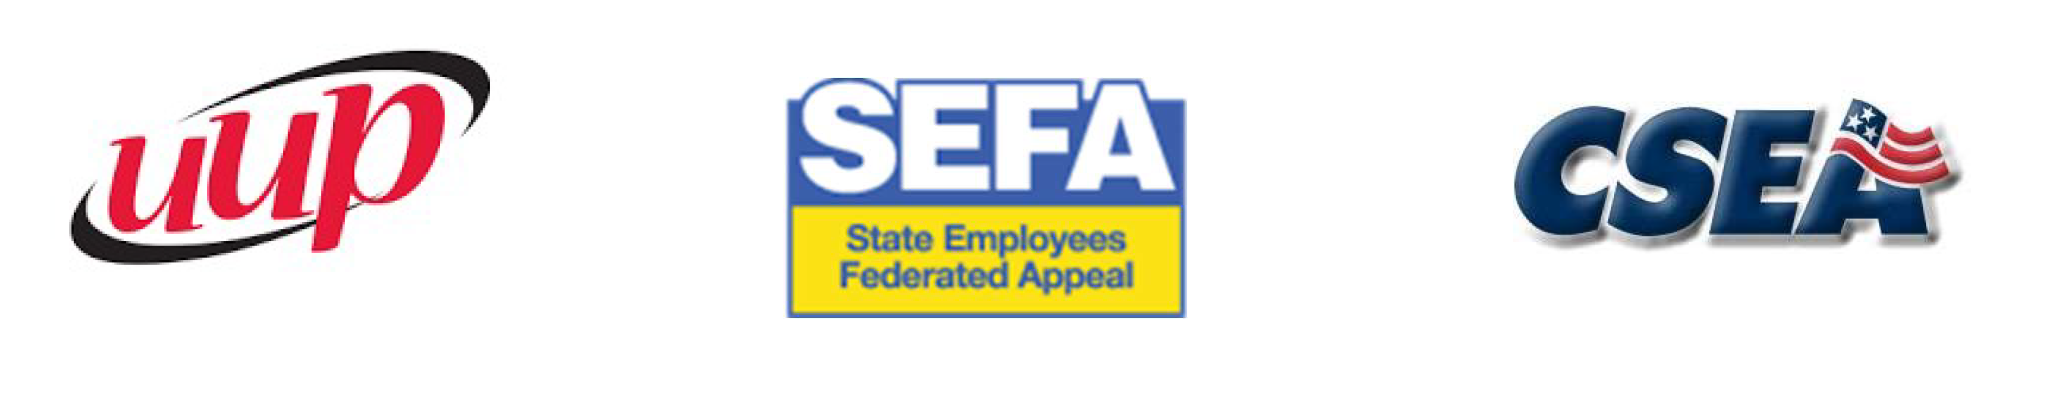 Logos of United University Professions, SEFA and CSEA